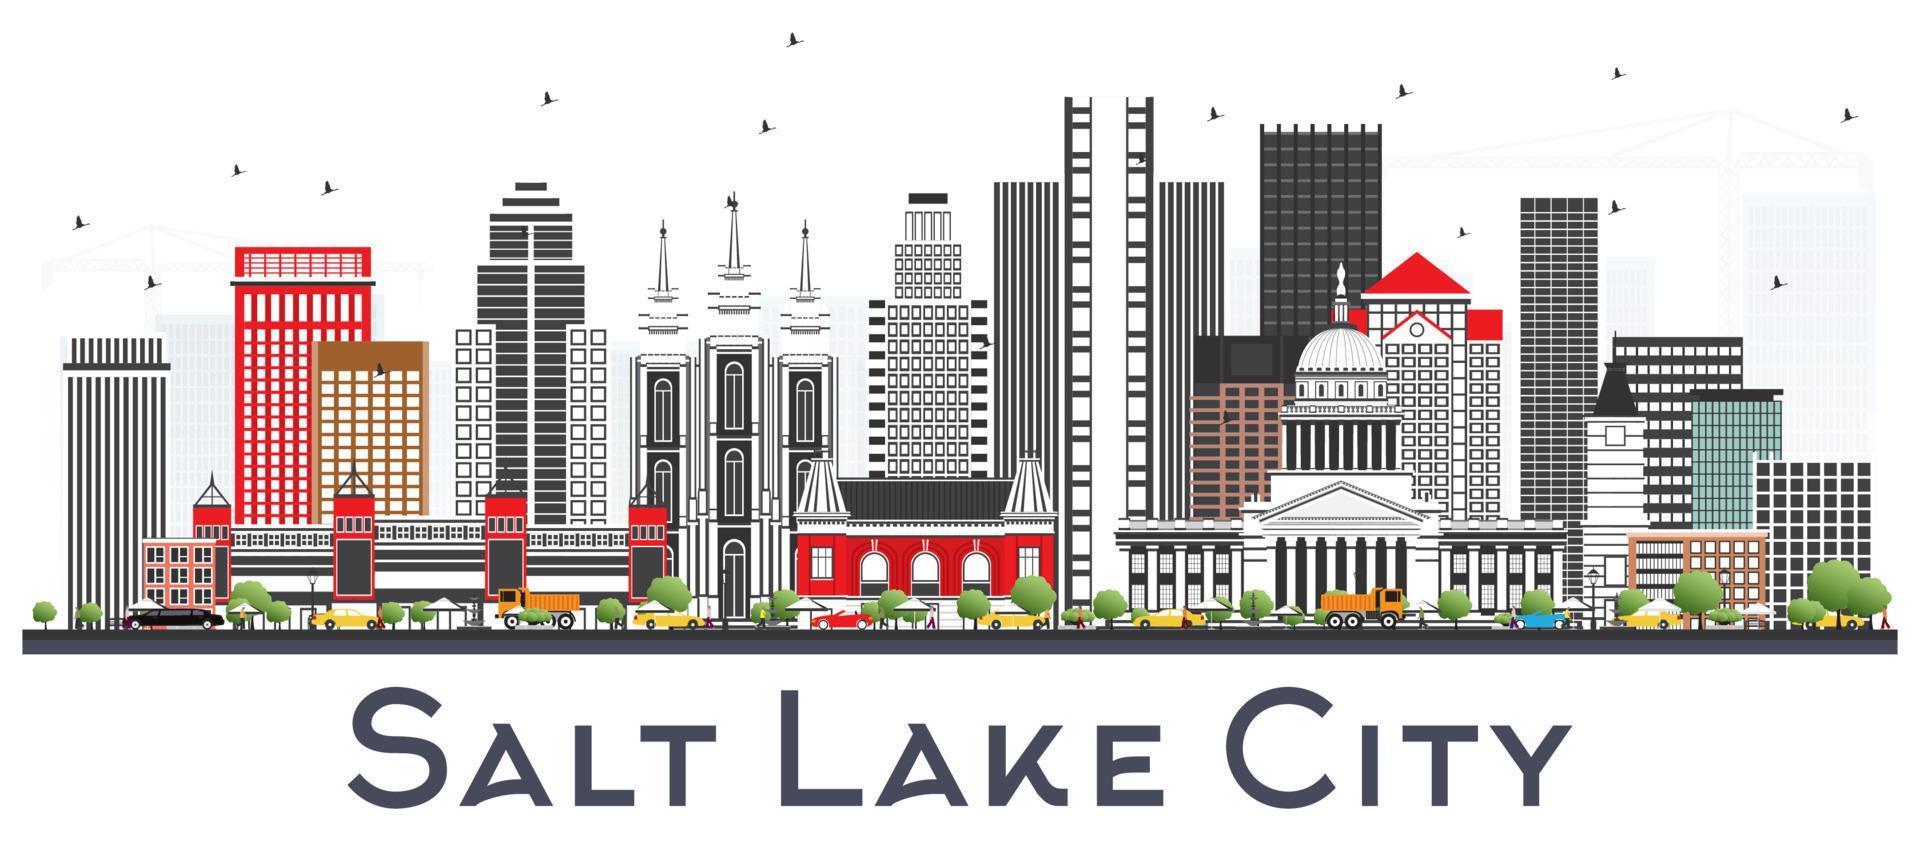 Salt Lake City Utah City Skyline with Gray Buildings Isolated on White. vector